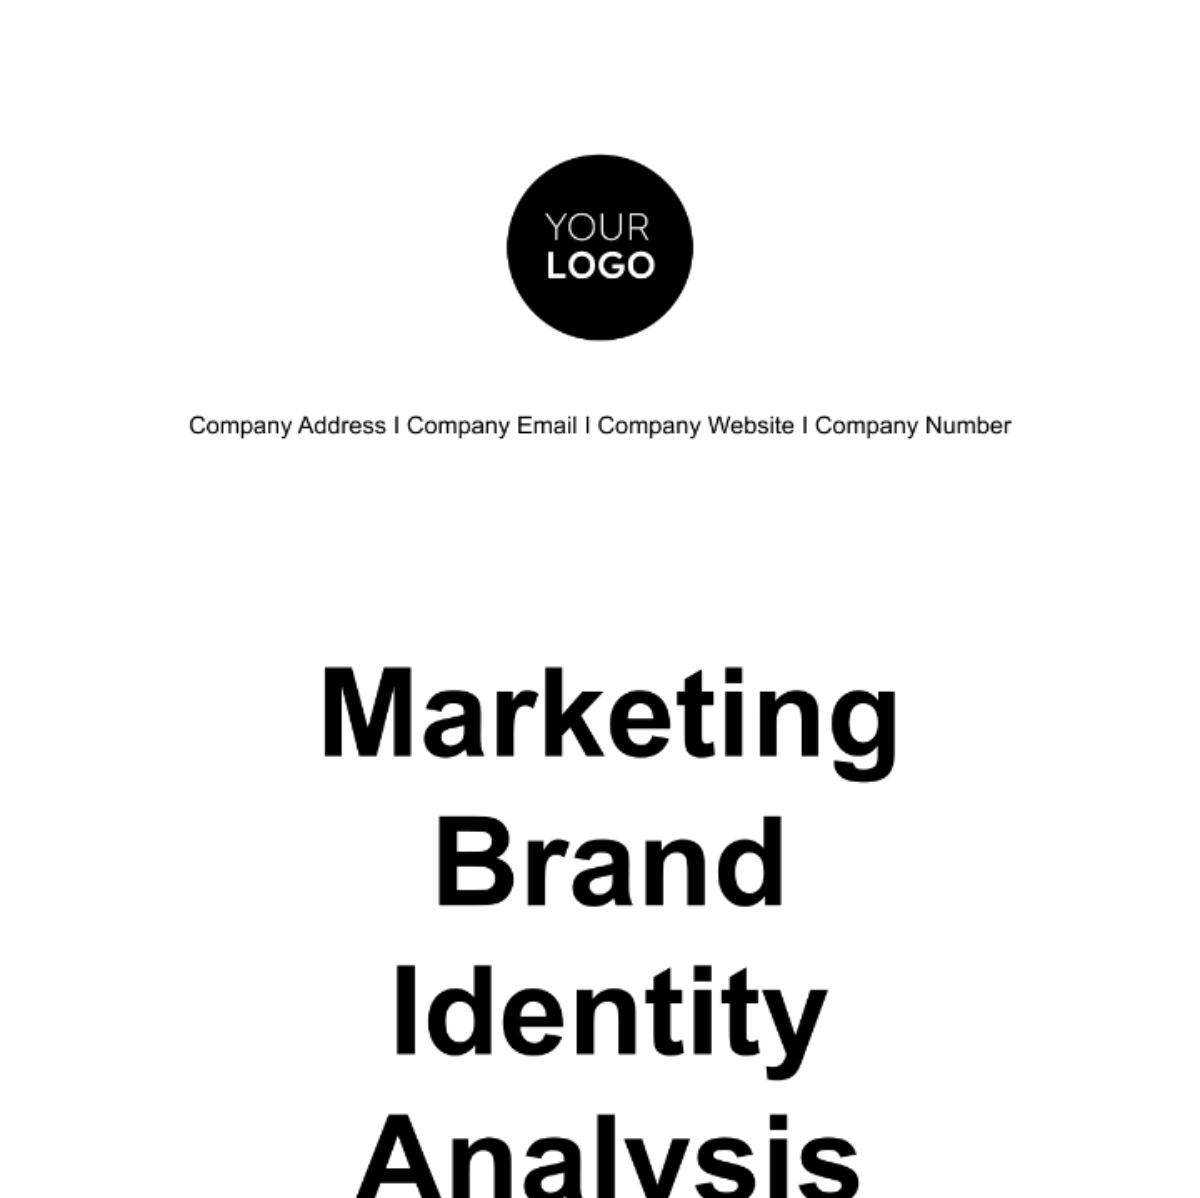 Marketing Brand Identity Analysis Template